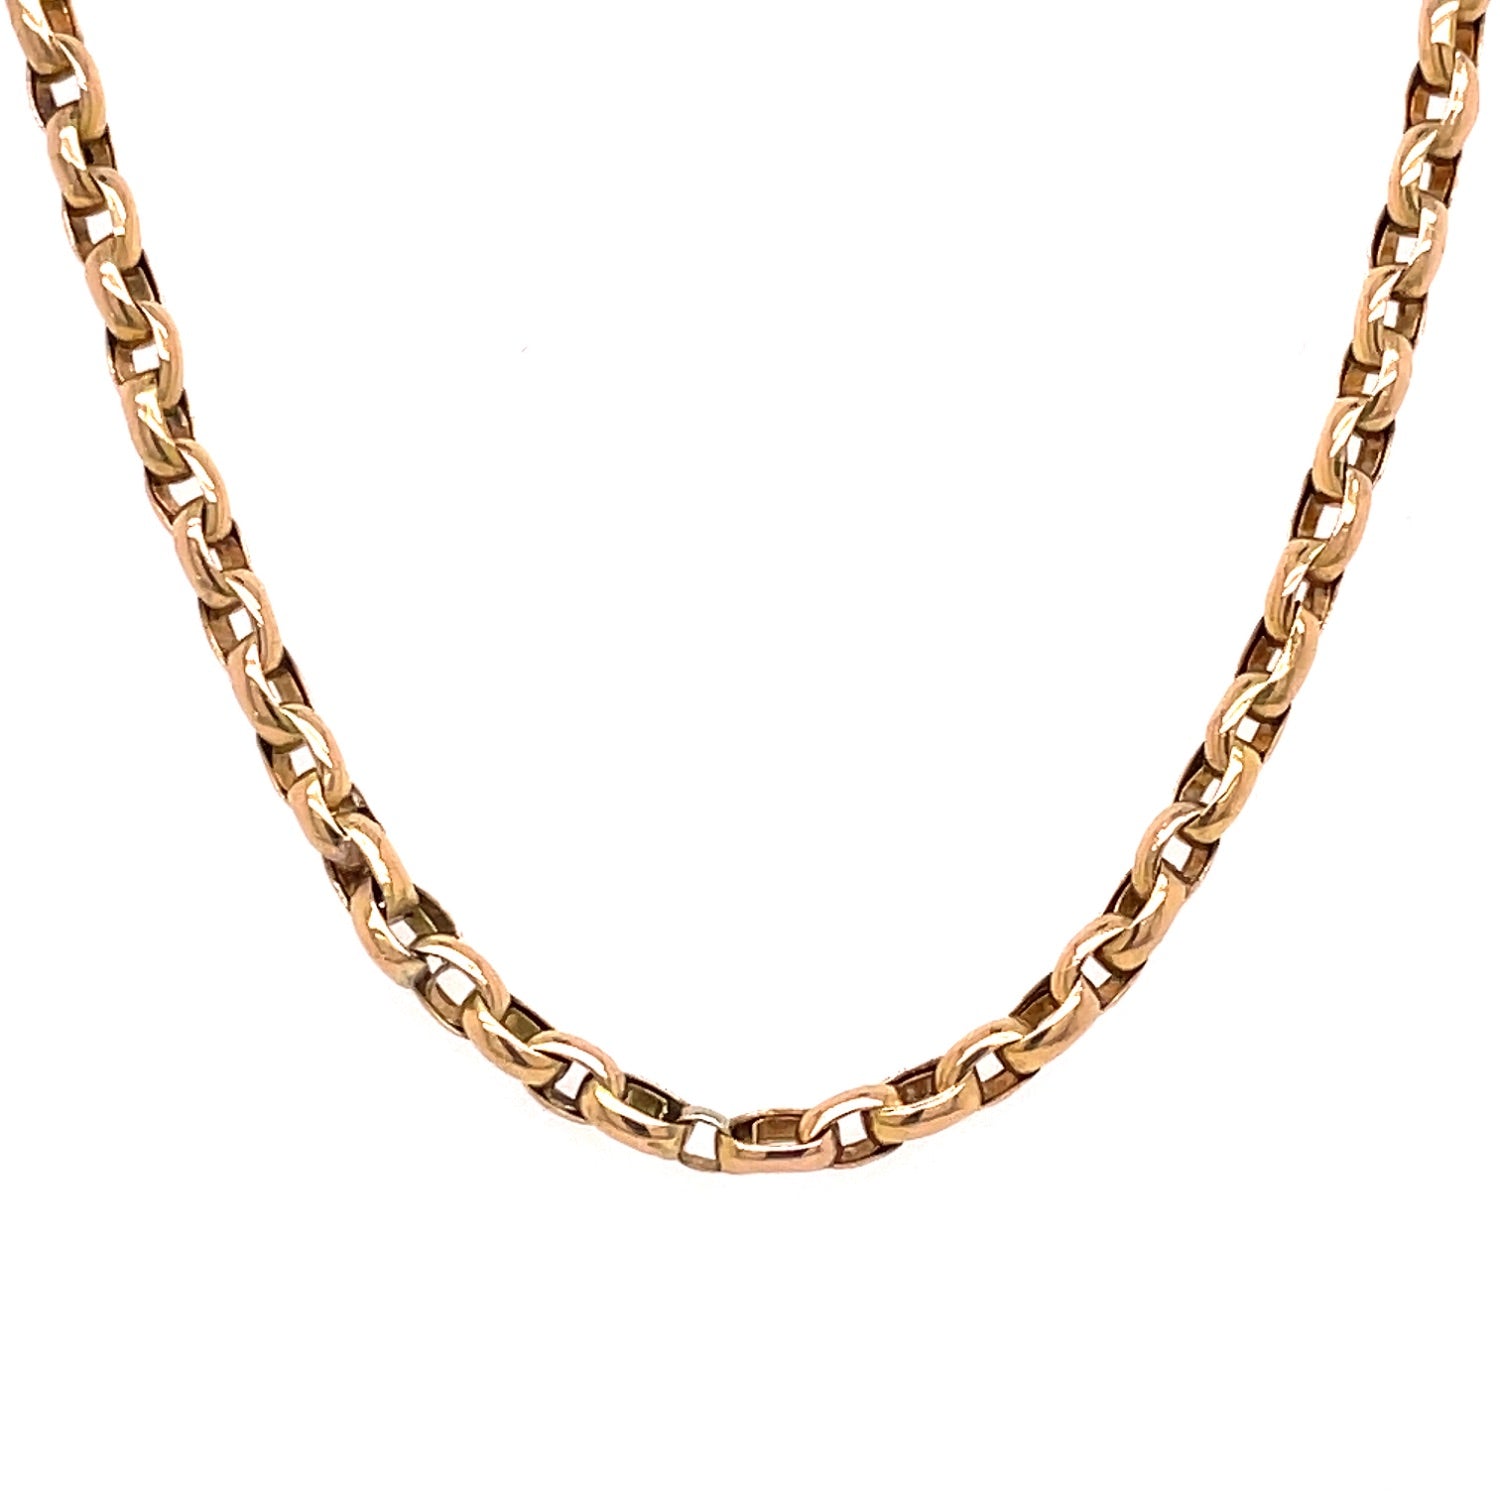 Shiny gold chain with interlocked links creates a stylish accessory.